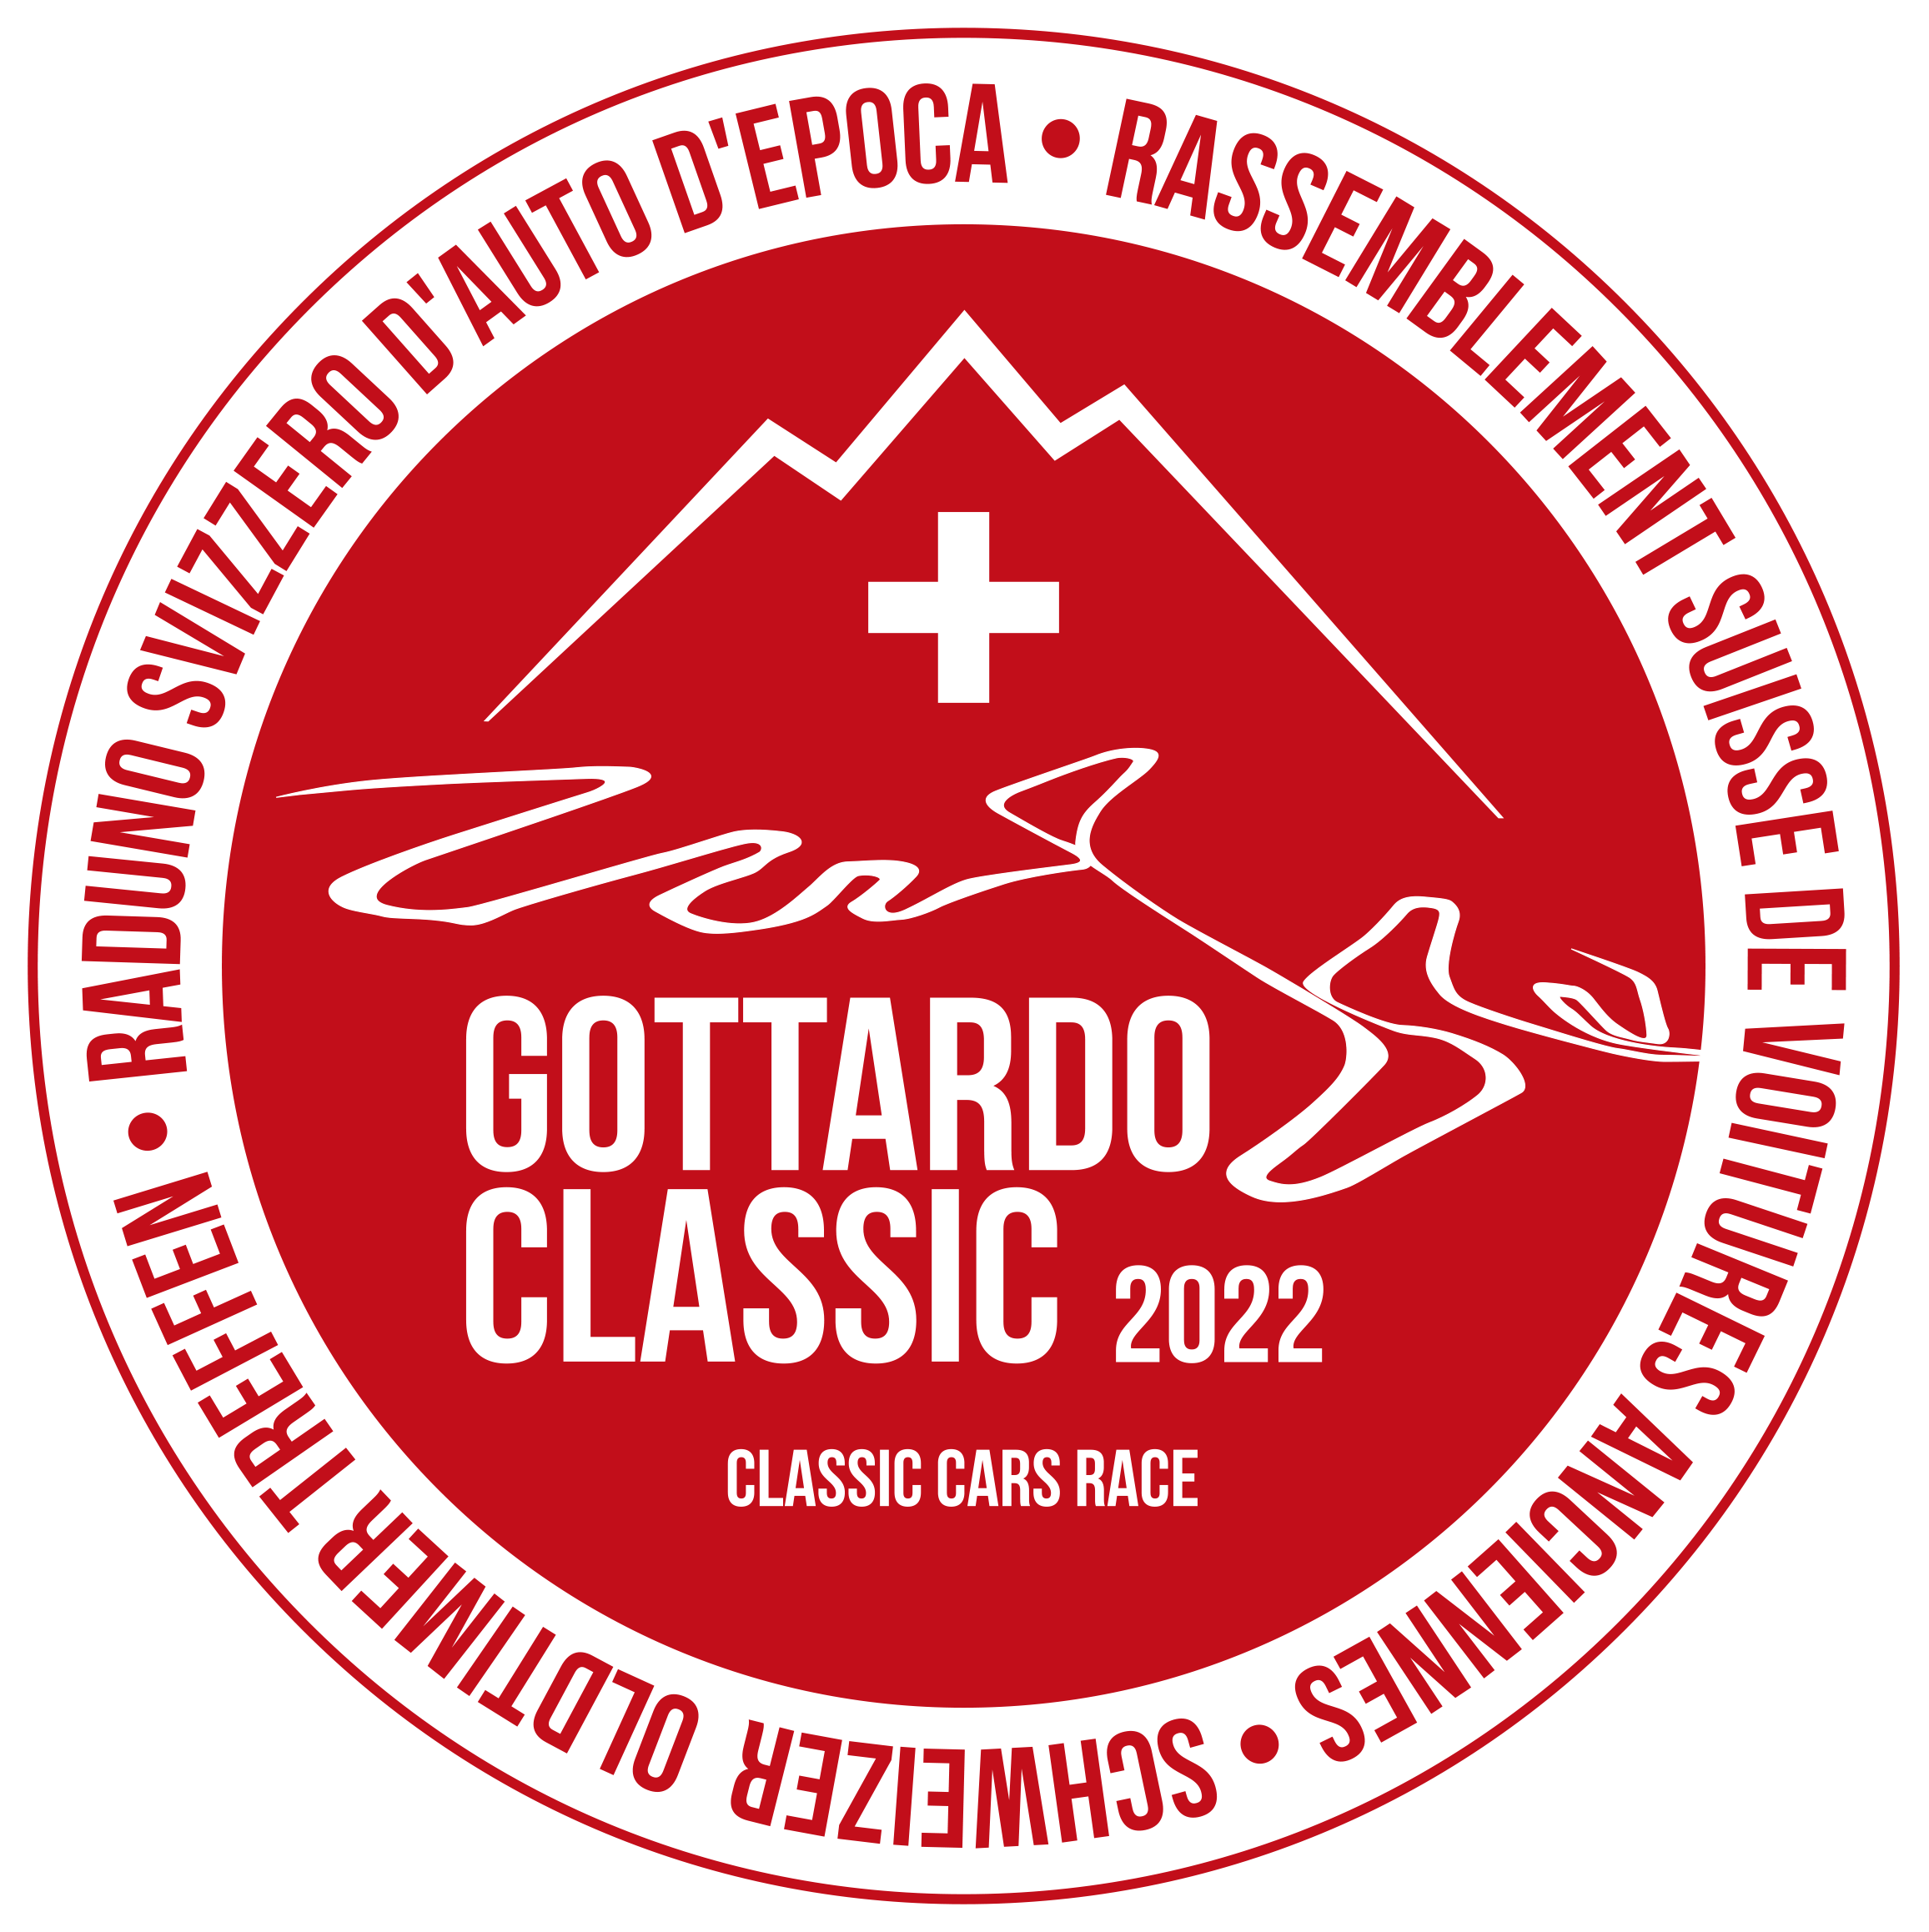 Gottardo Classic 2022